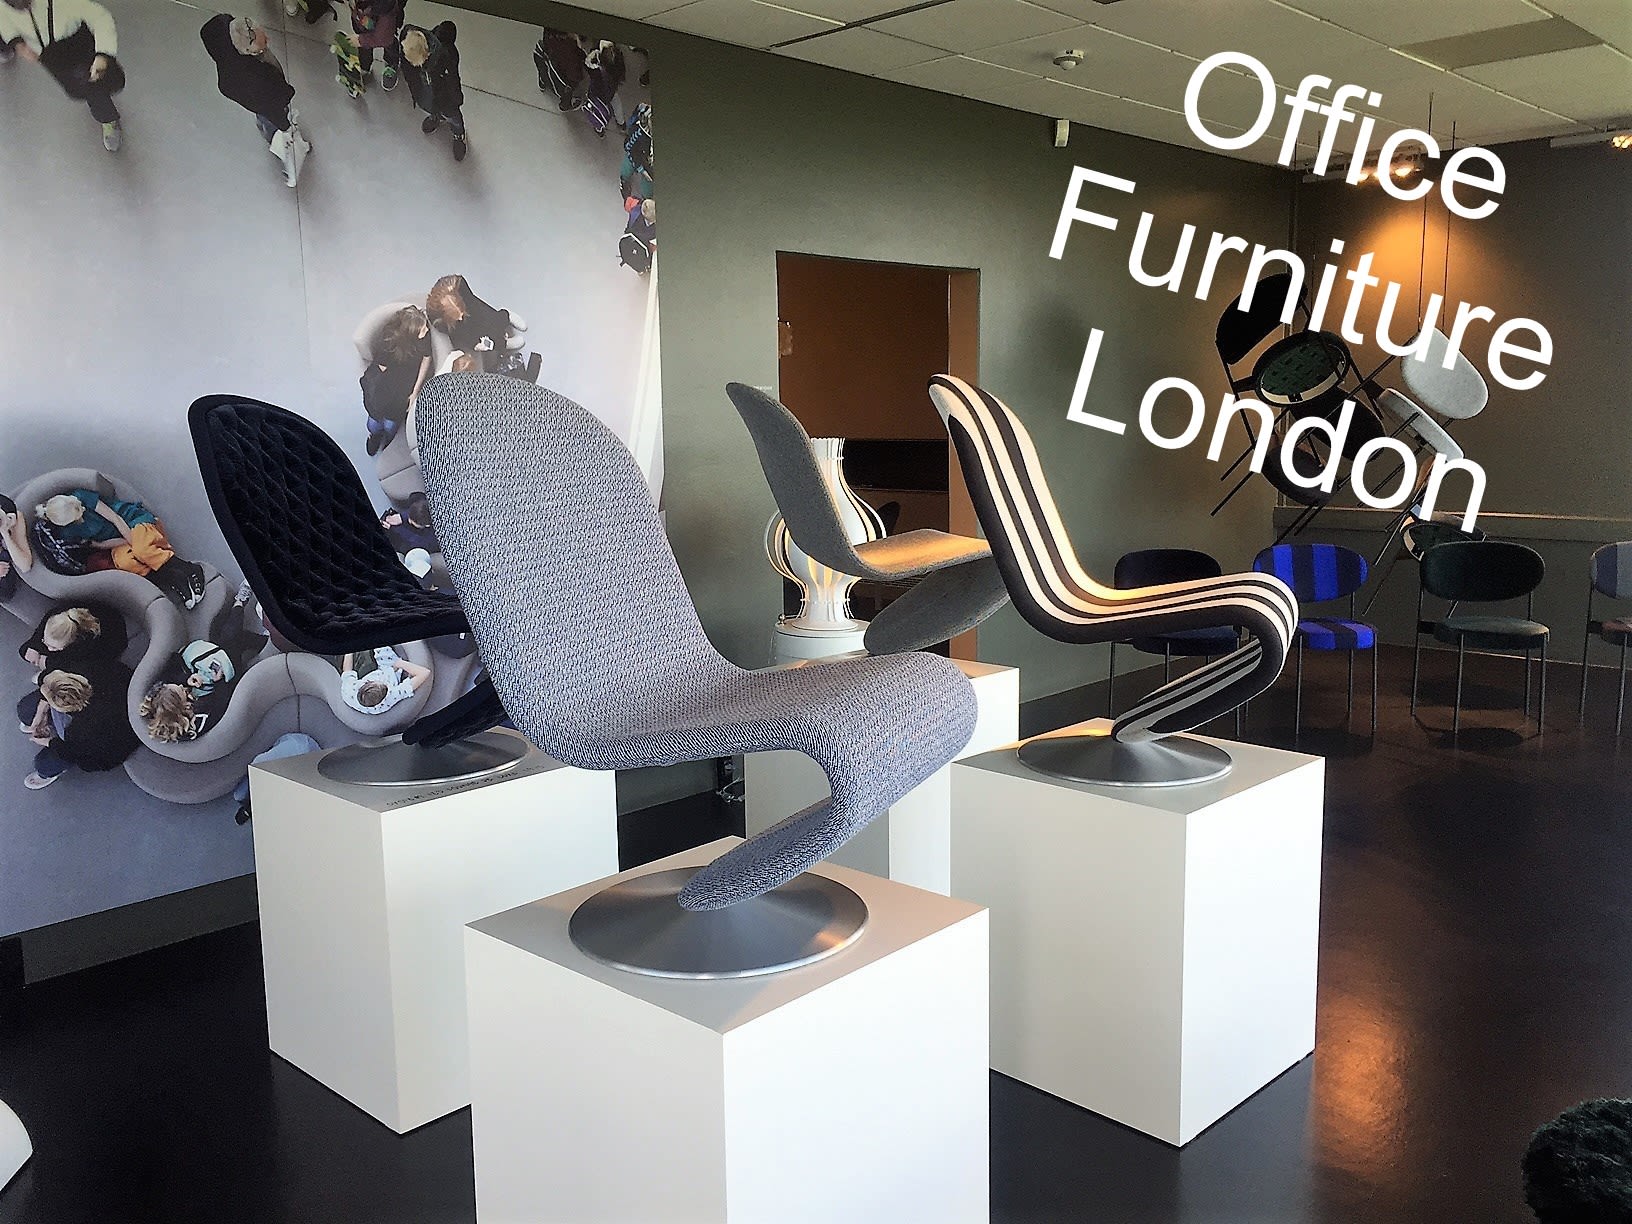 Office Furniture London Ltd